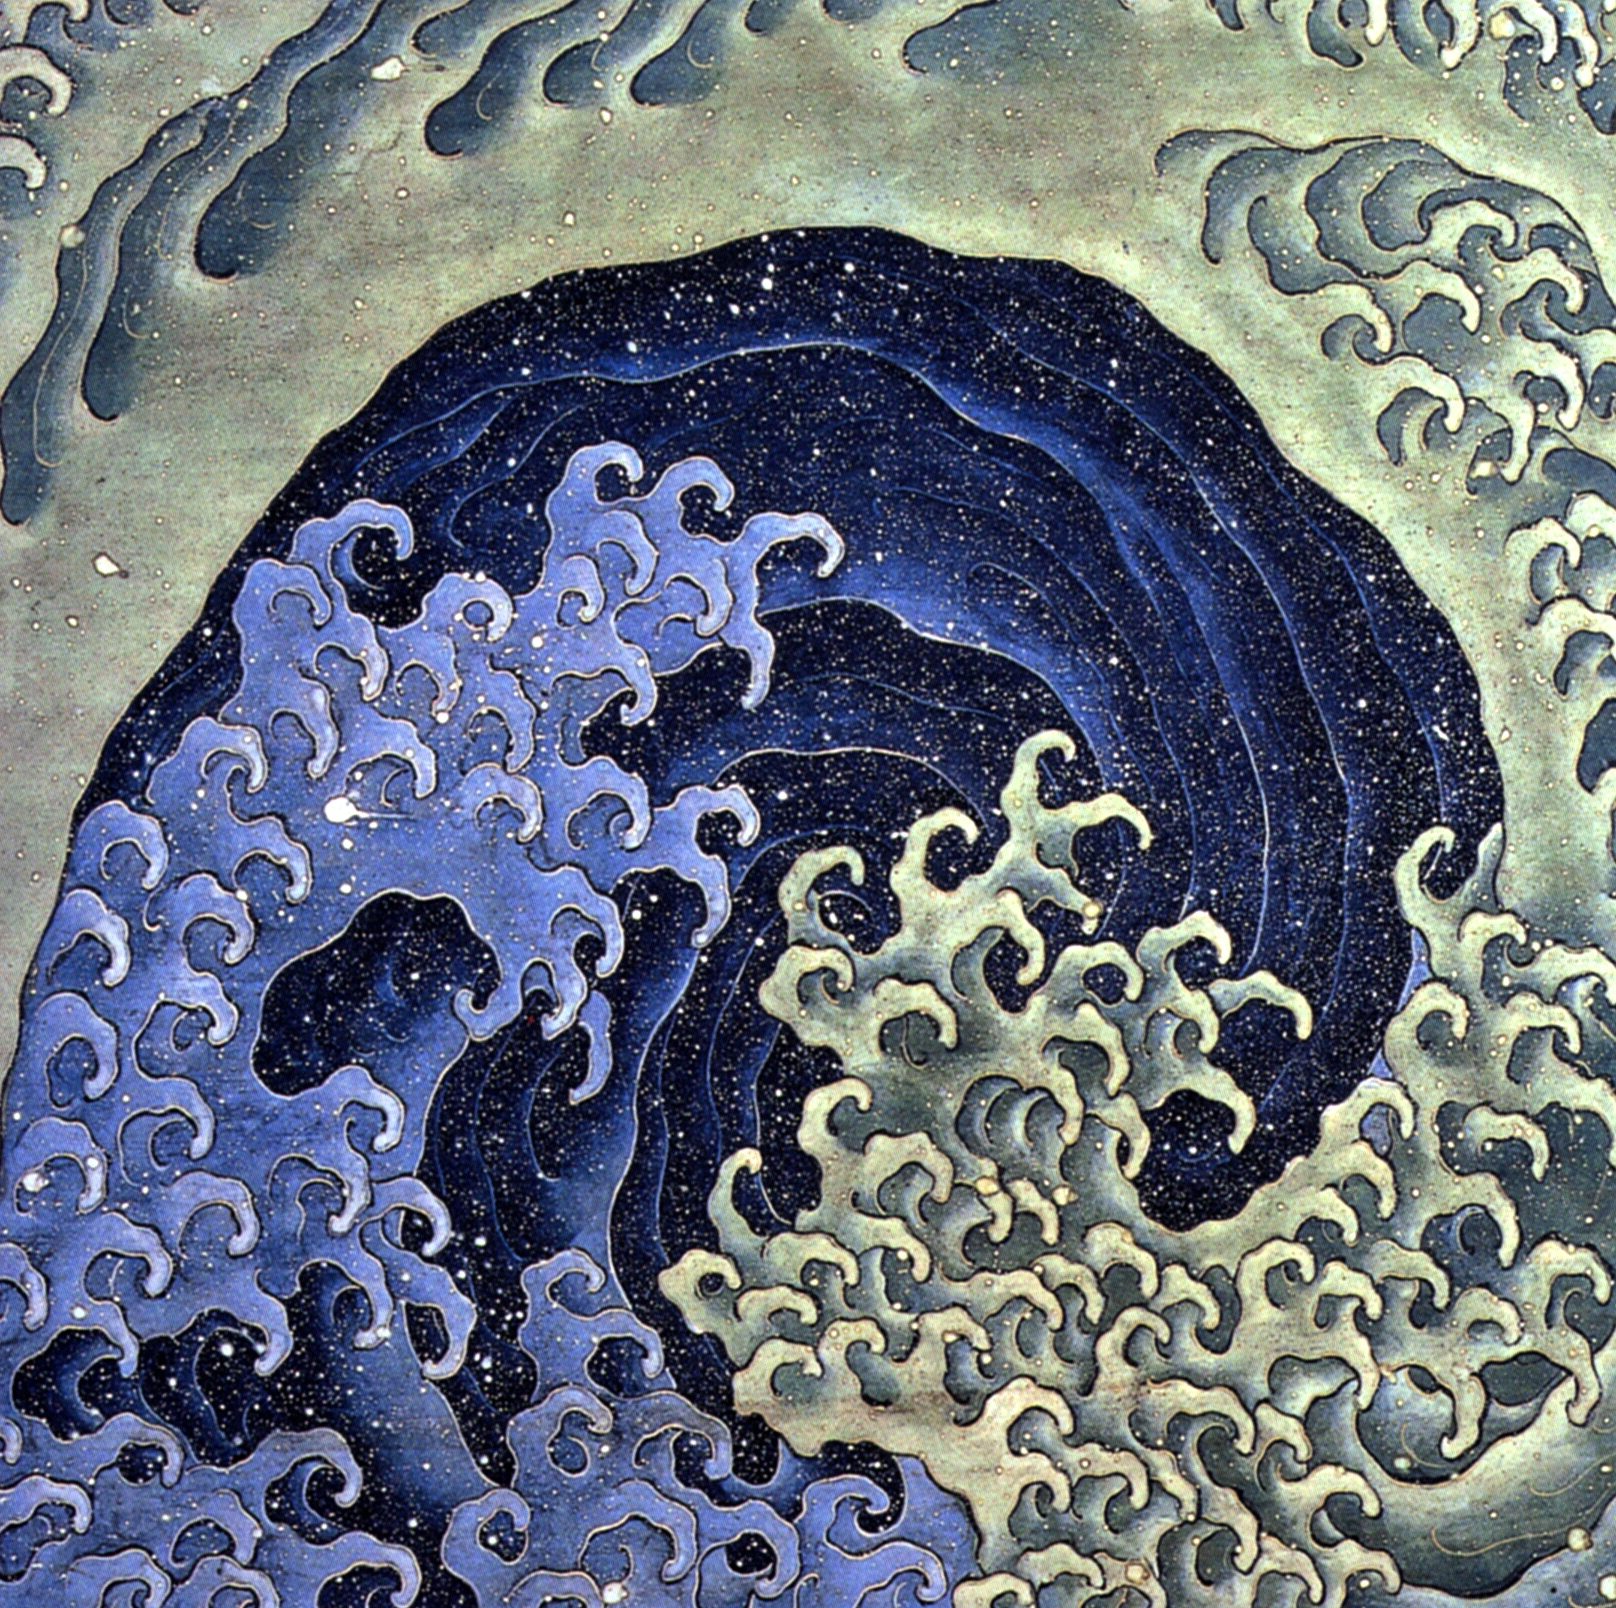 Feminine Wave by Katsushika Hokusai - 1845 - 118 × 118.5 cm The Sumida Hokusai Museum